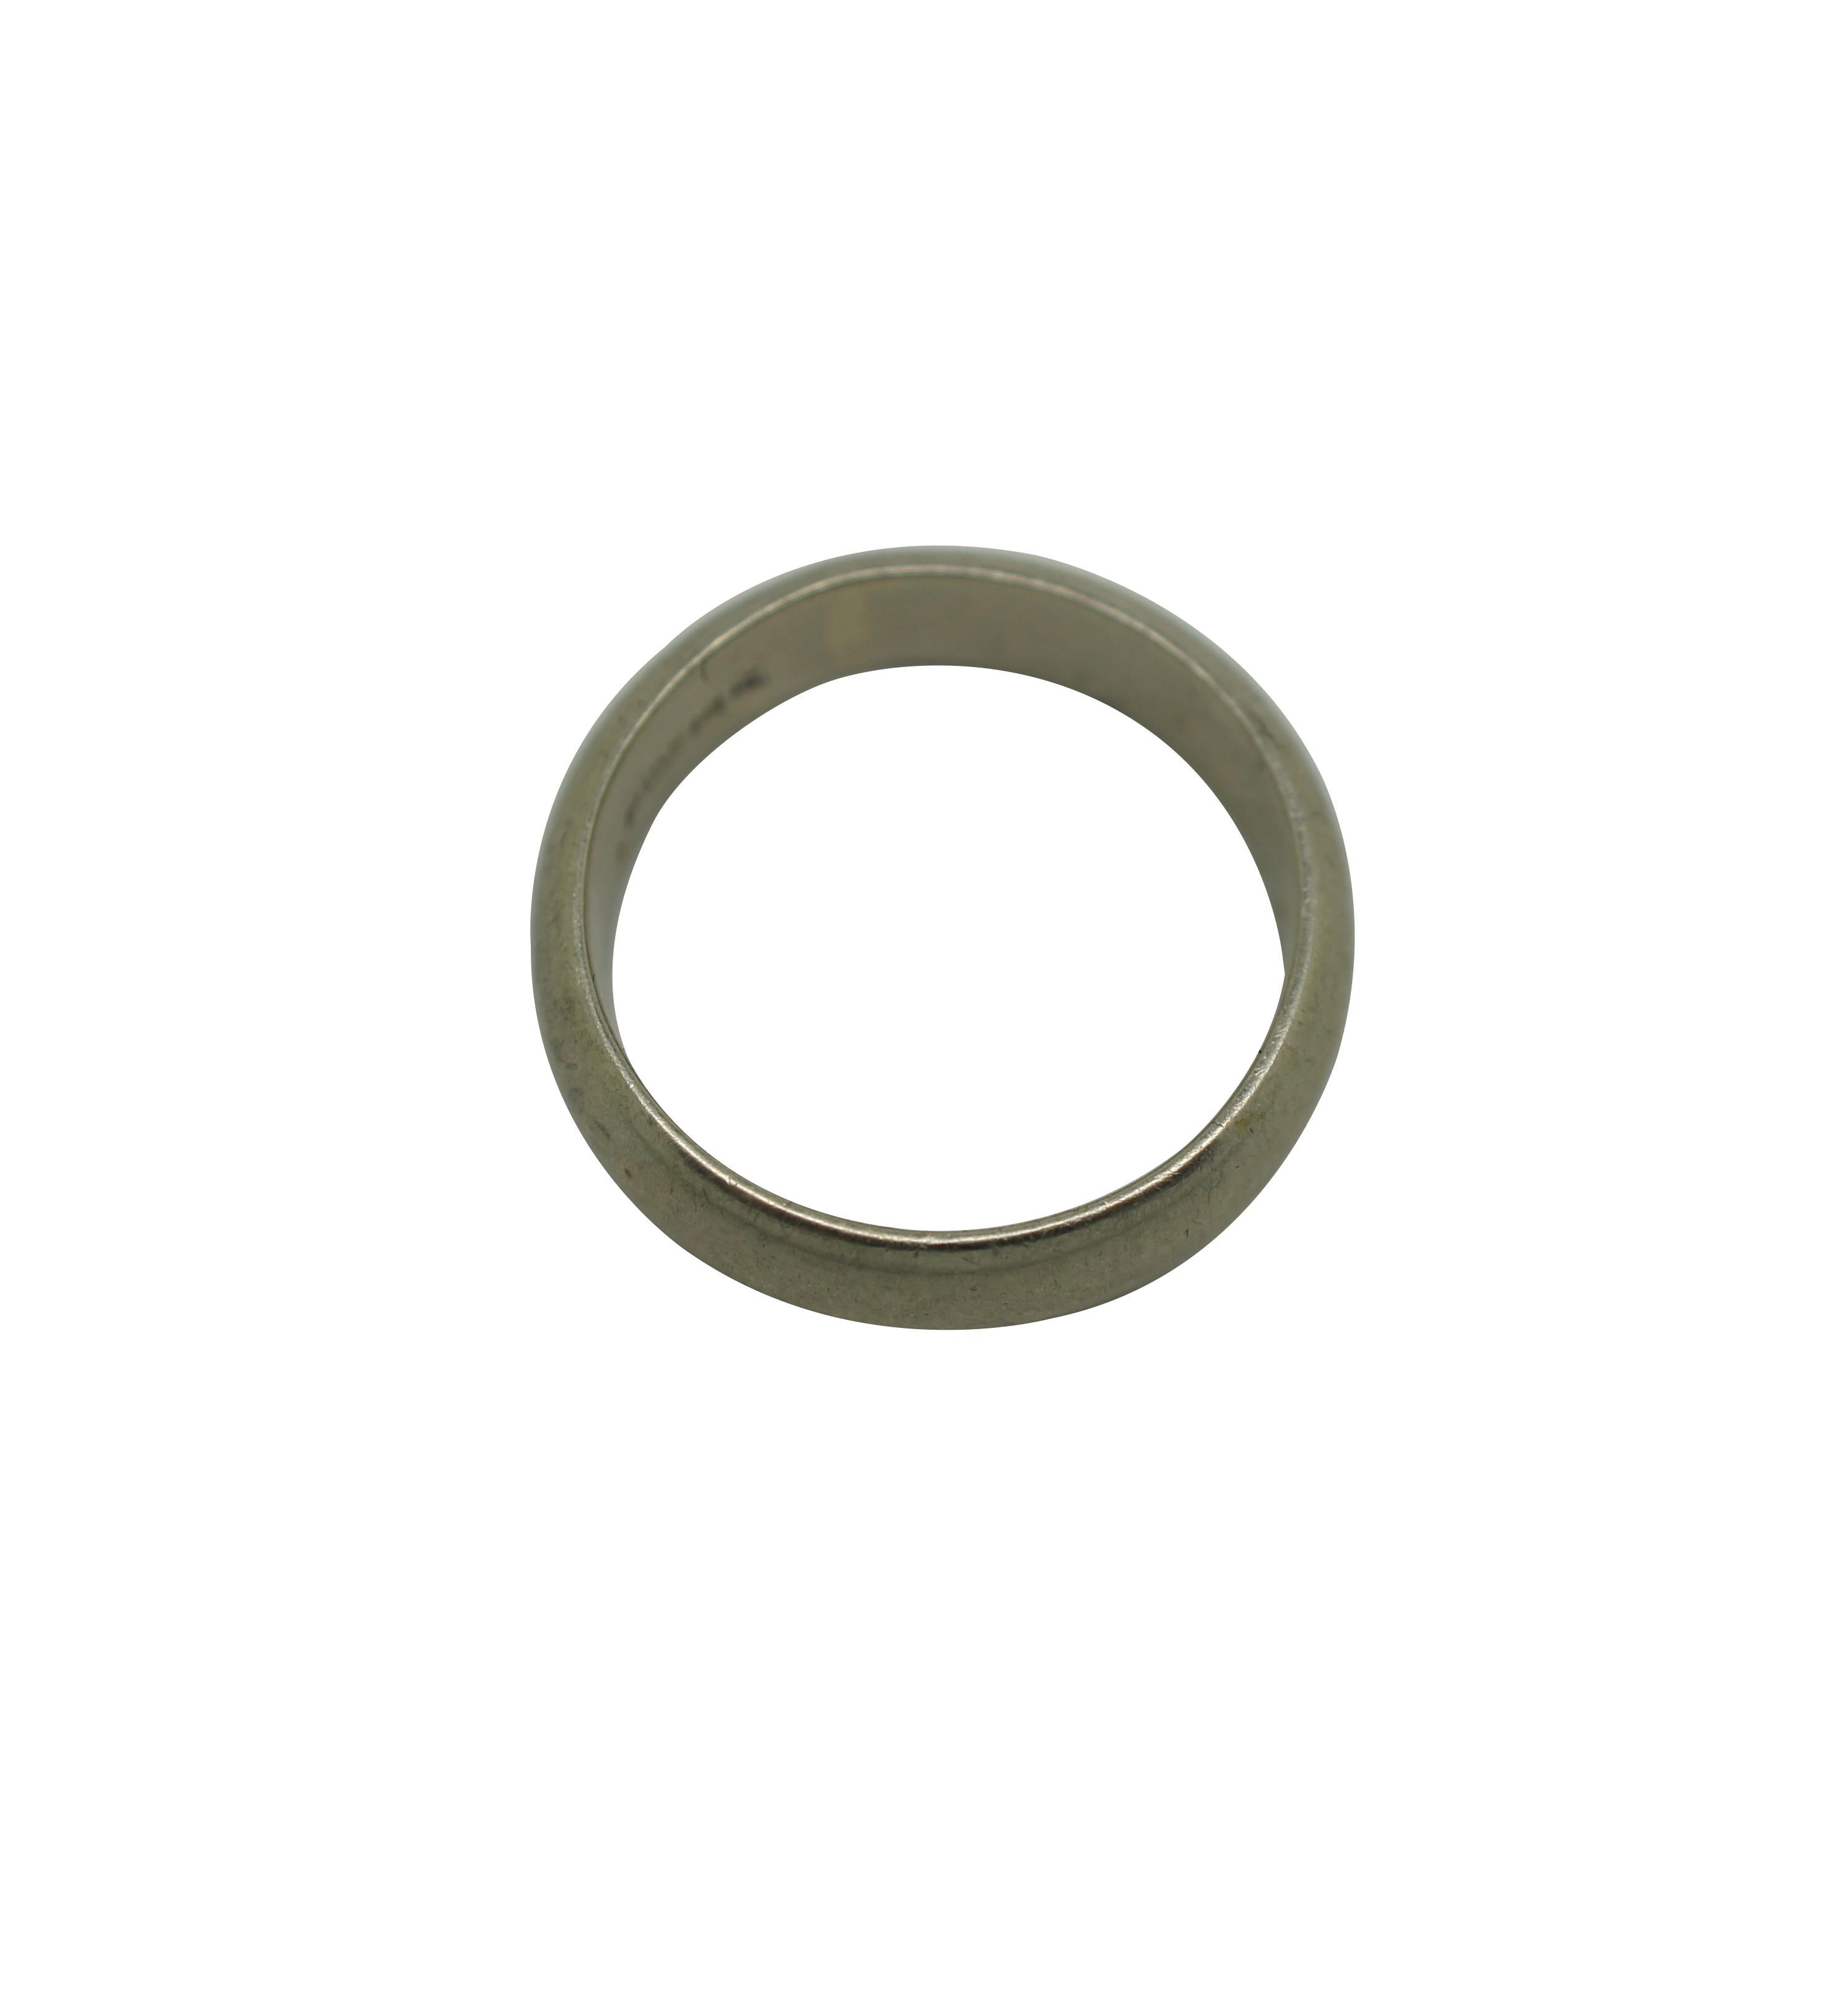 Vintage Premesco PMS 14k white gold plain thick wedding band / ring. 

PREMESCO INC. - PRECIOUS METALS SPECIALTIES INC.
NEWARK, NEW JERSEY, USA

Dimensions:
0.875” x 0.875” x 0.25” (Width x Depth x Height) / Size - 7.5 / 6.3 g